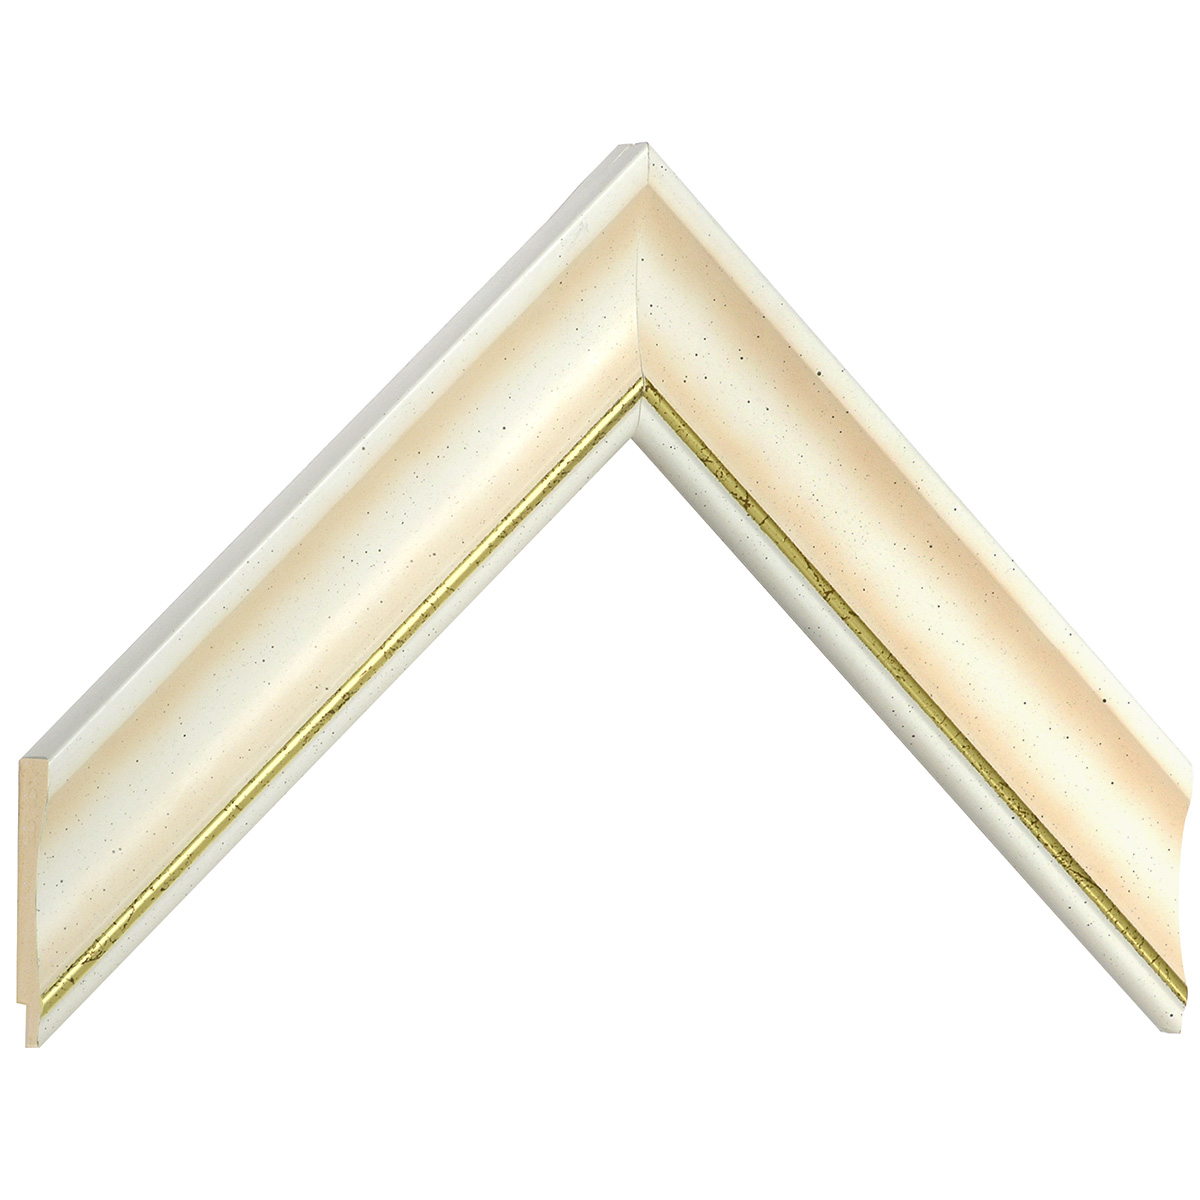 Liner ayous 35mm - convex shape, cream coloured, gold edge - Sample